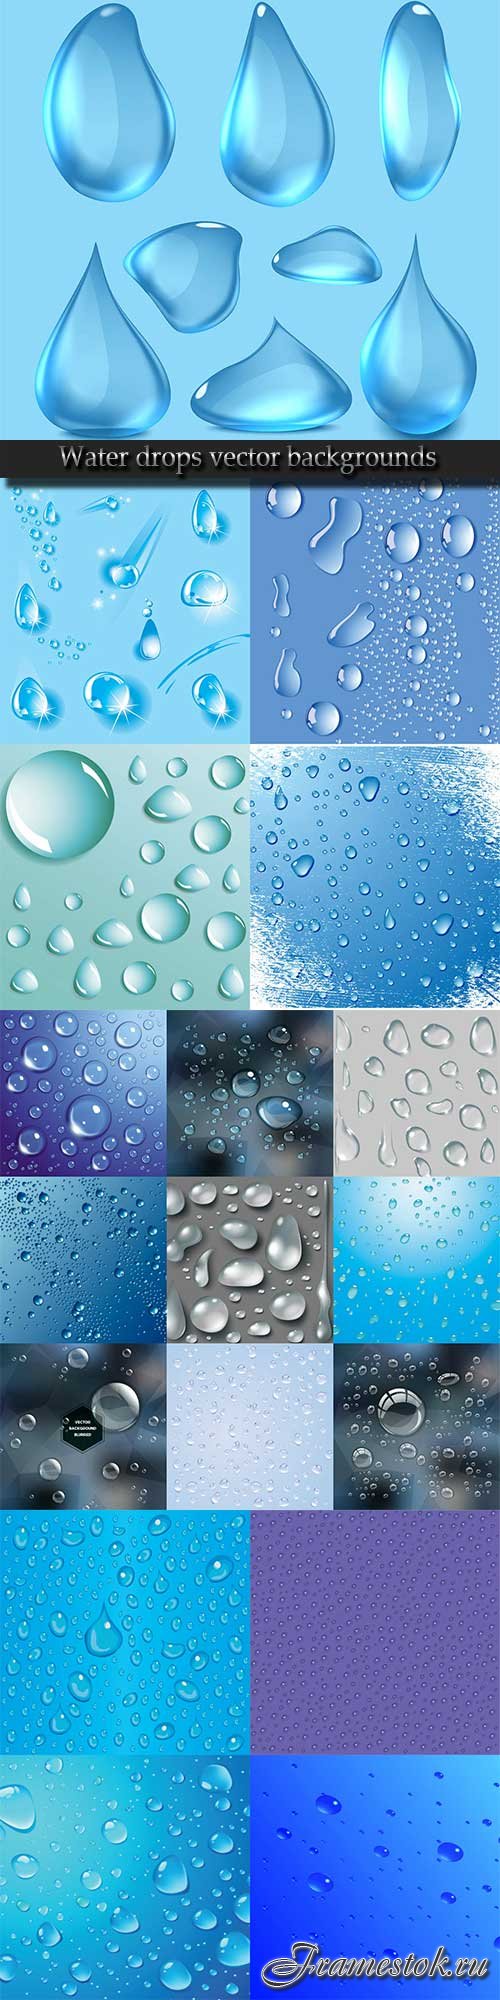 Water drops vector backgrounds